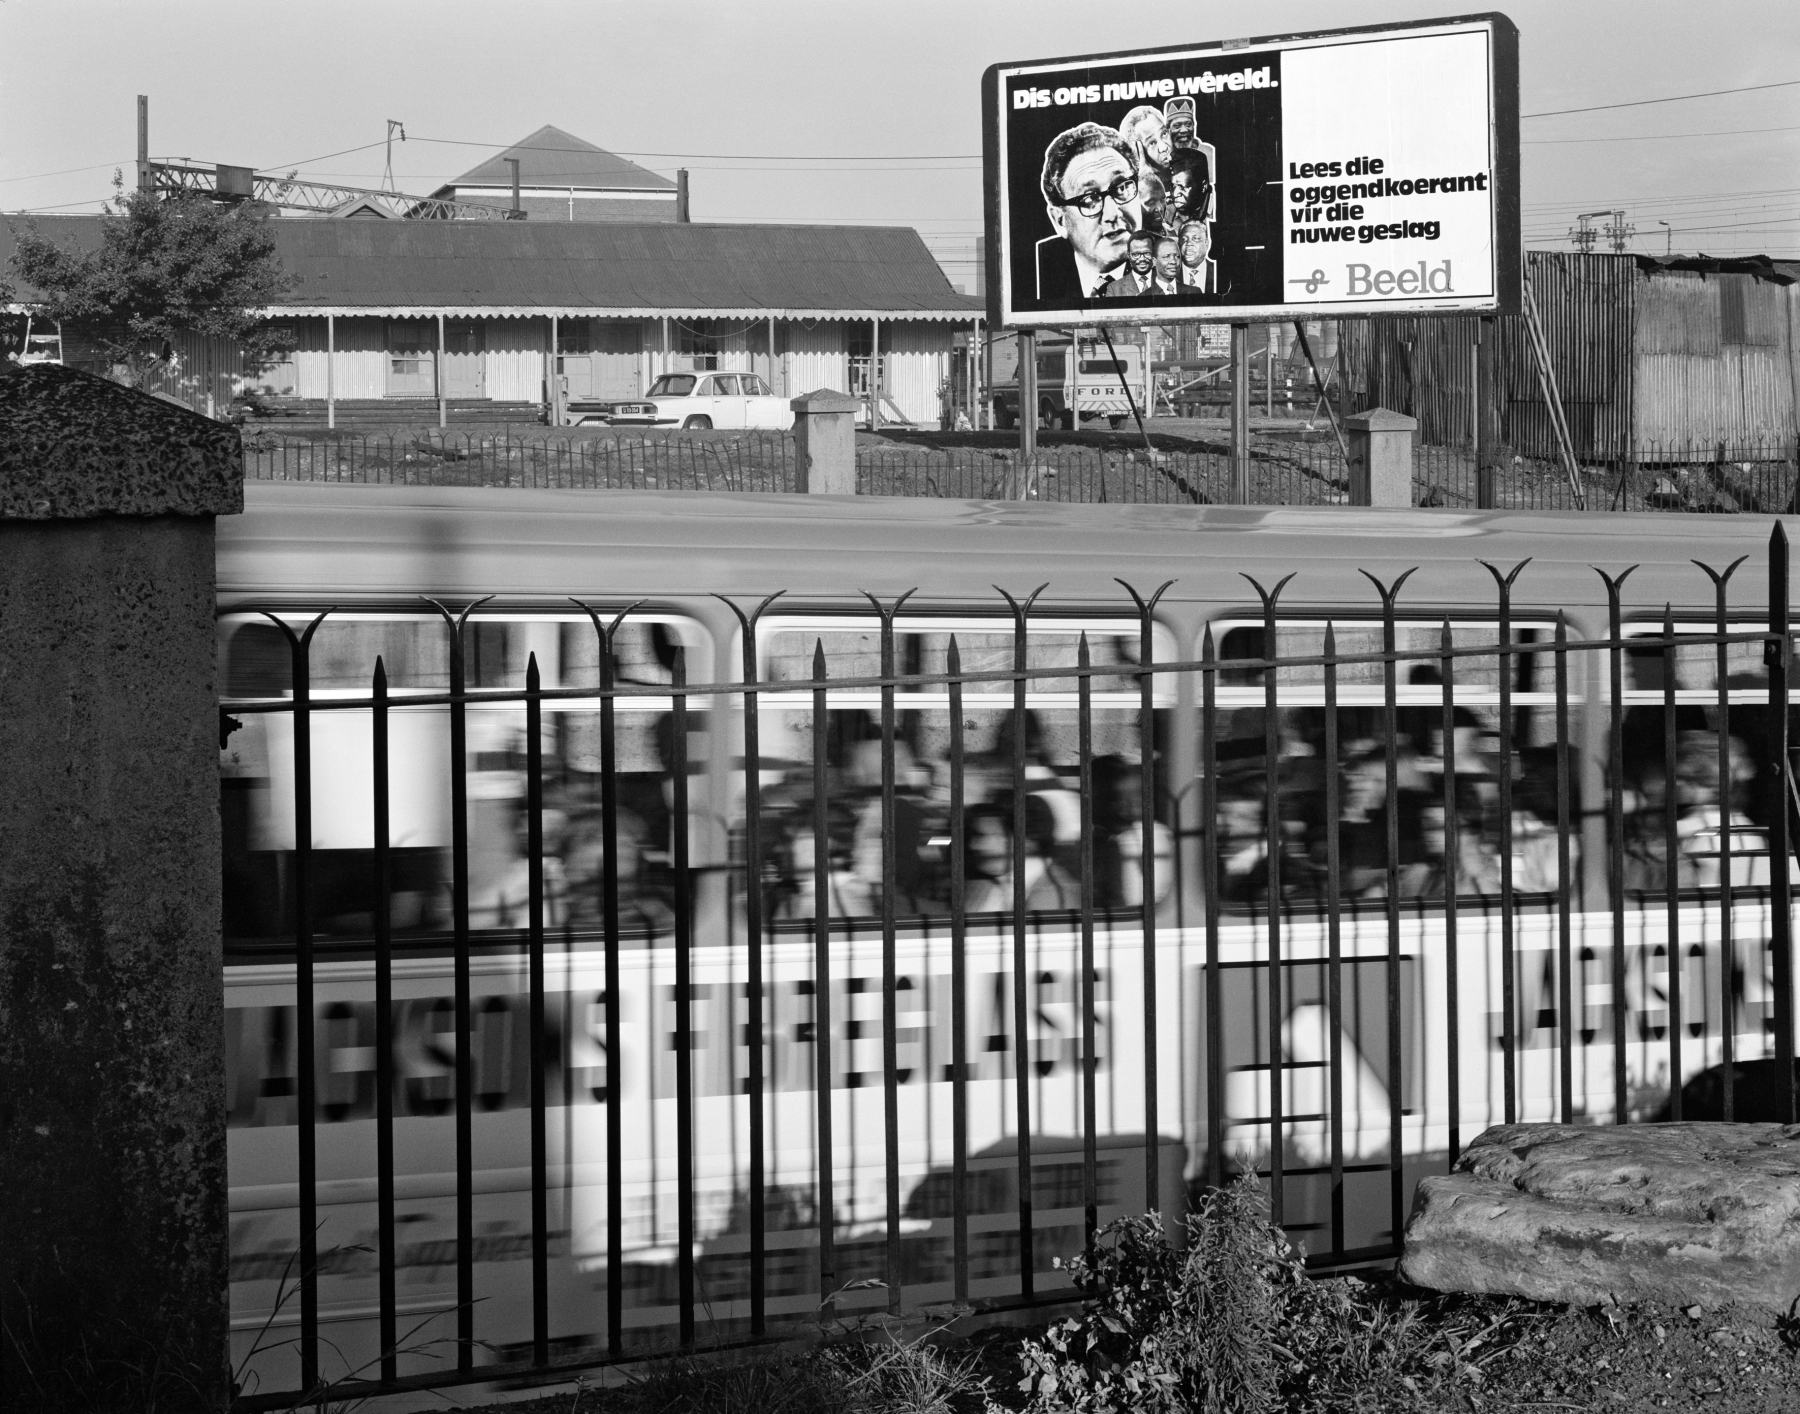 David Goldblatt

This is our new world. Read the morning newspaper for the new generation - Beeld, billboard, Braamfontein, October 1976

Silver gelatin handprint

Sales enquiries